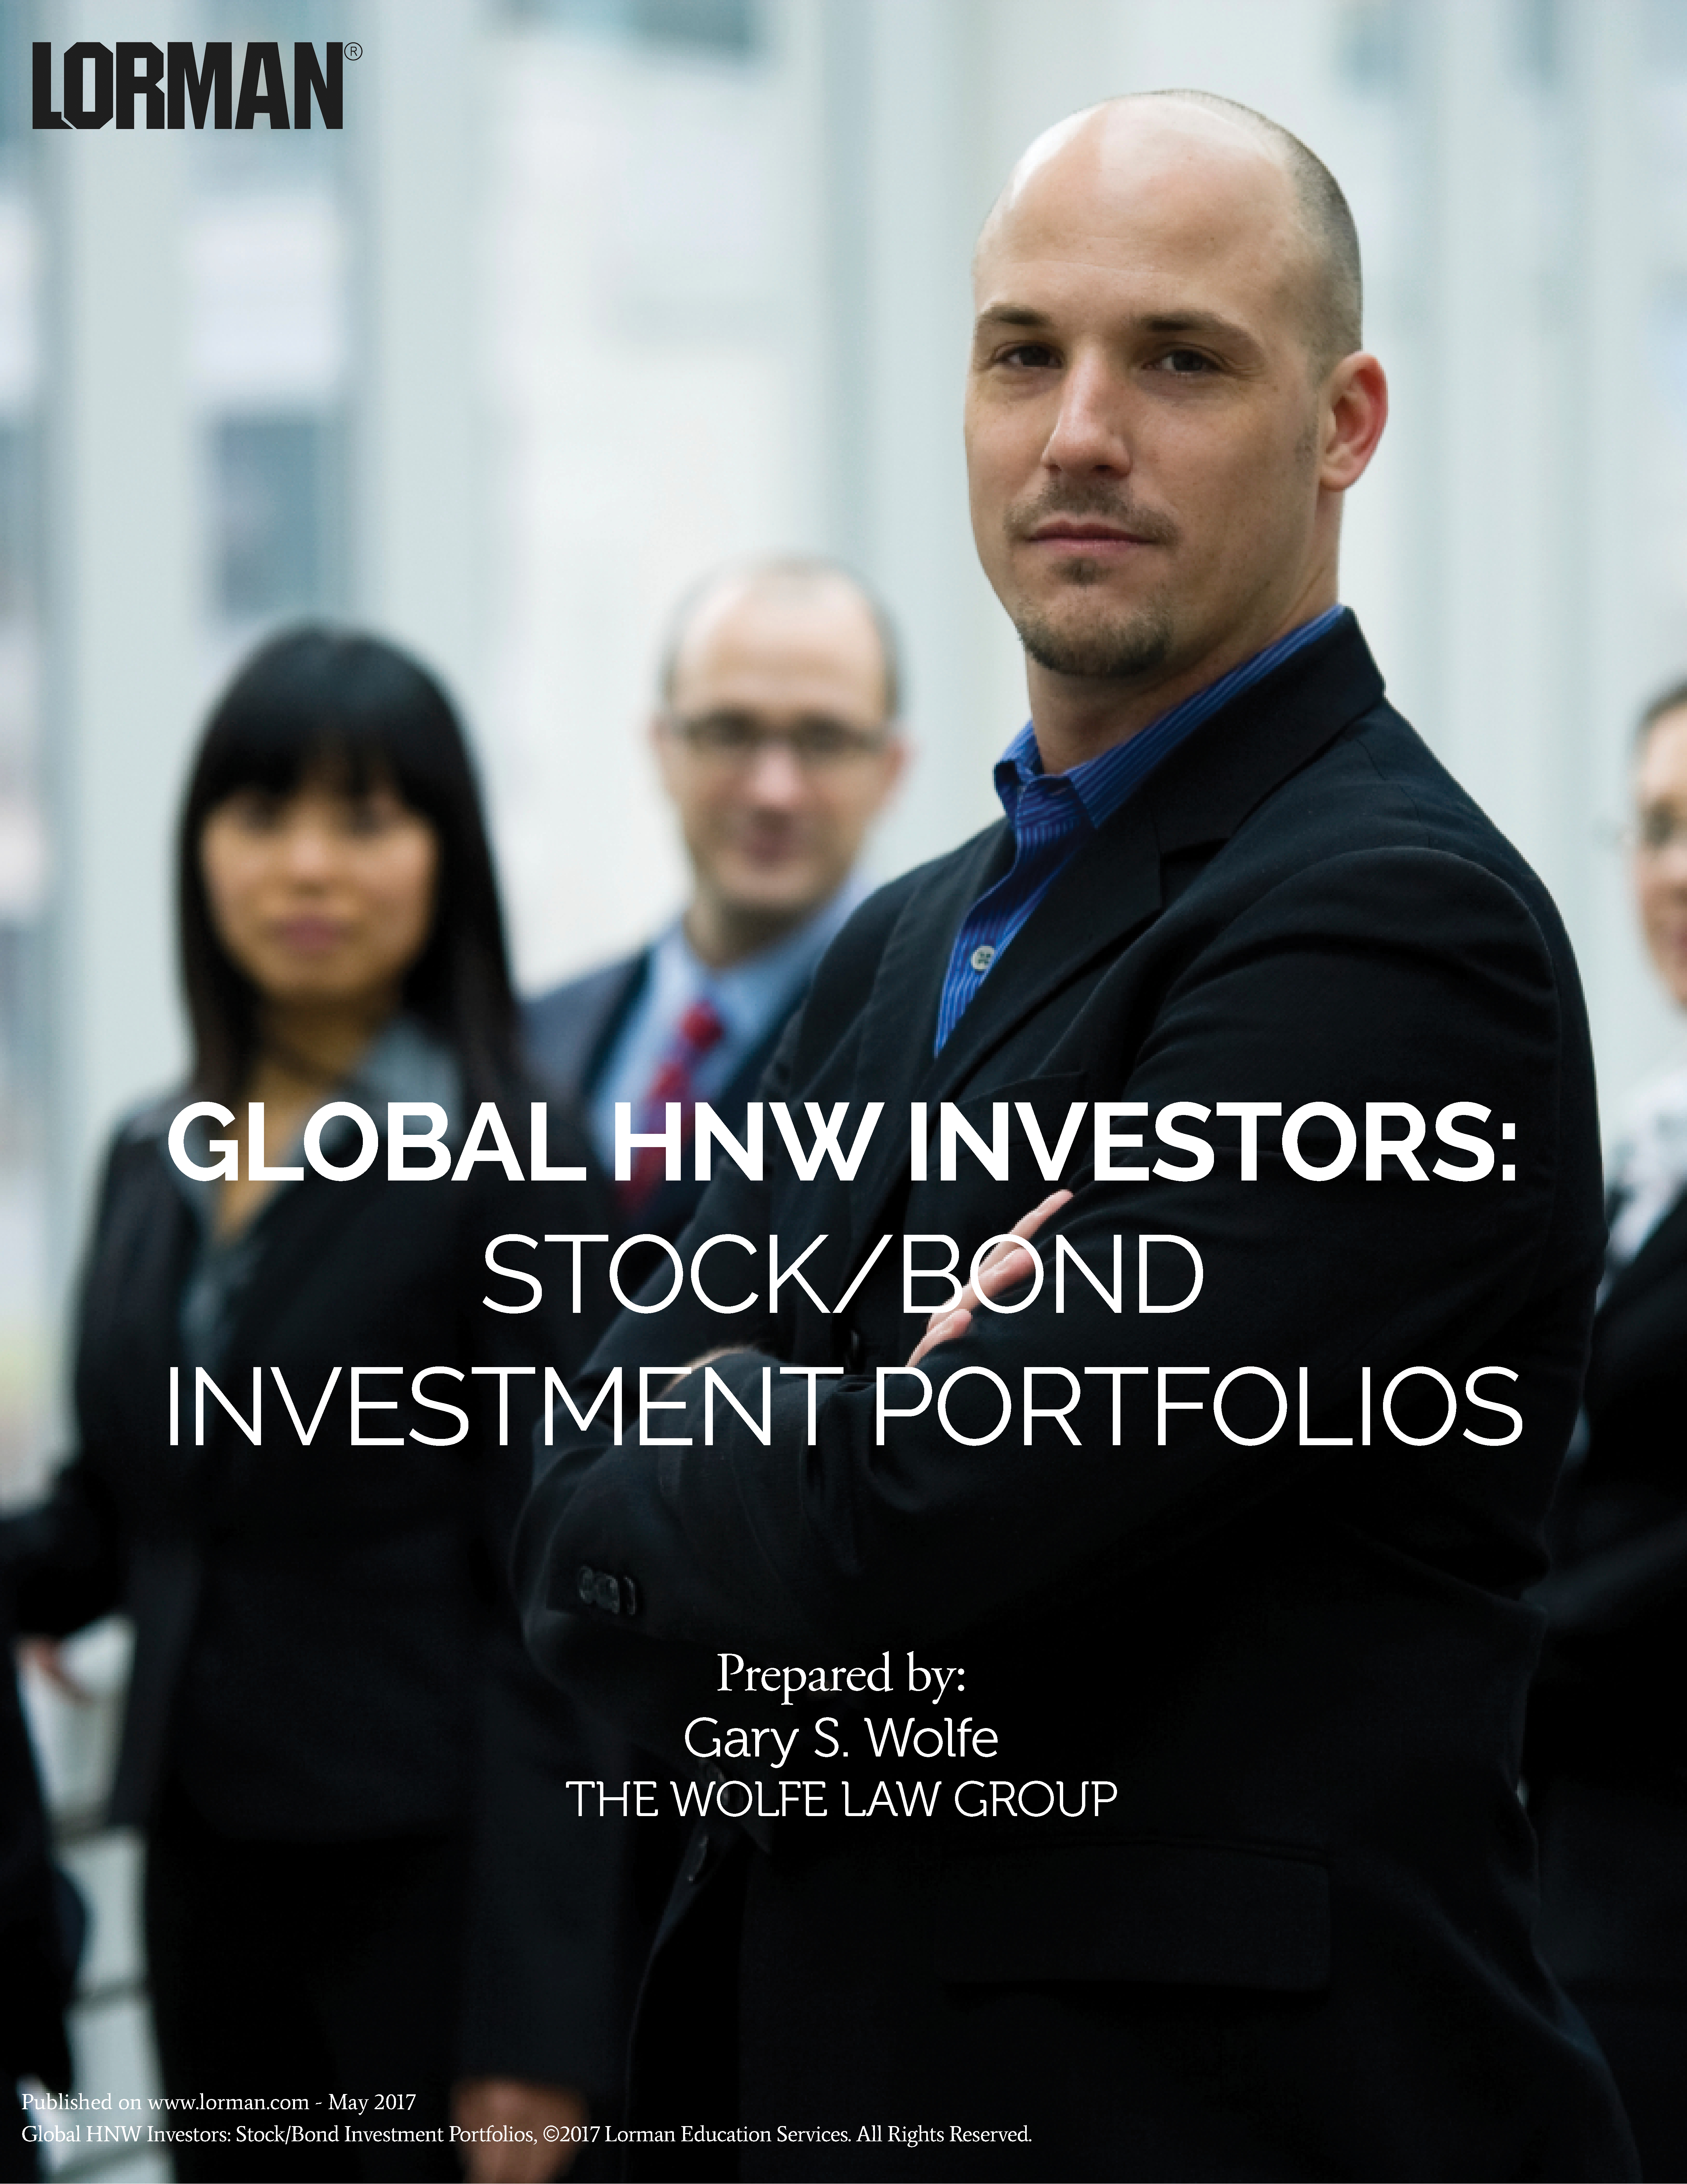 Global HNW Investors: Stock/Bond Investment Portfolios